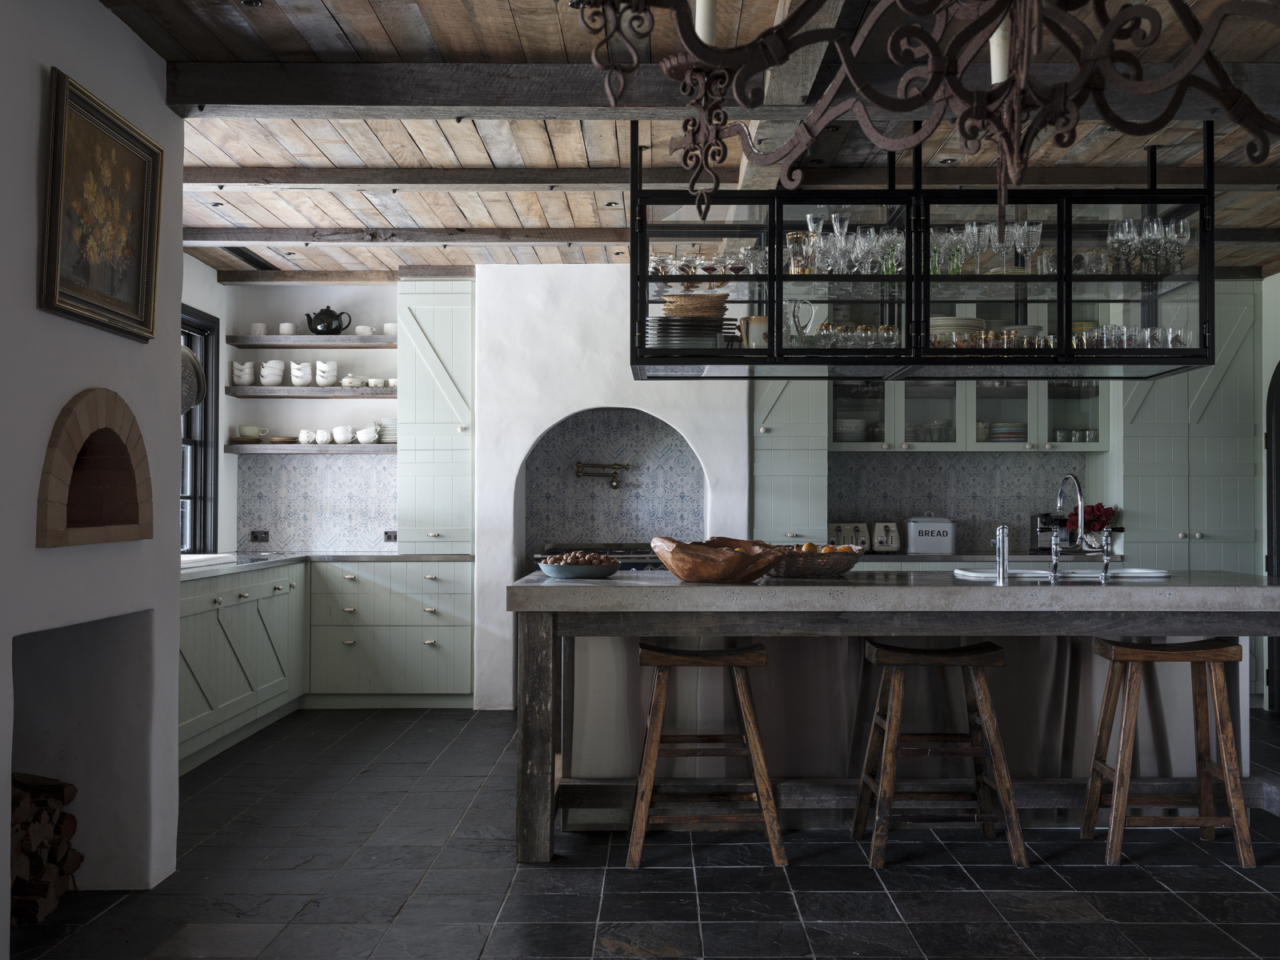 Real home: A designer's eclectic semi-rural farmhouse - The Interiors ...